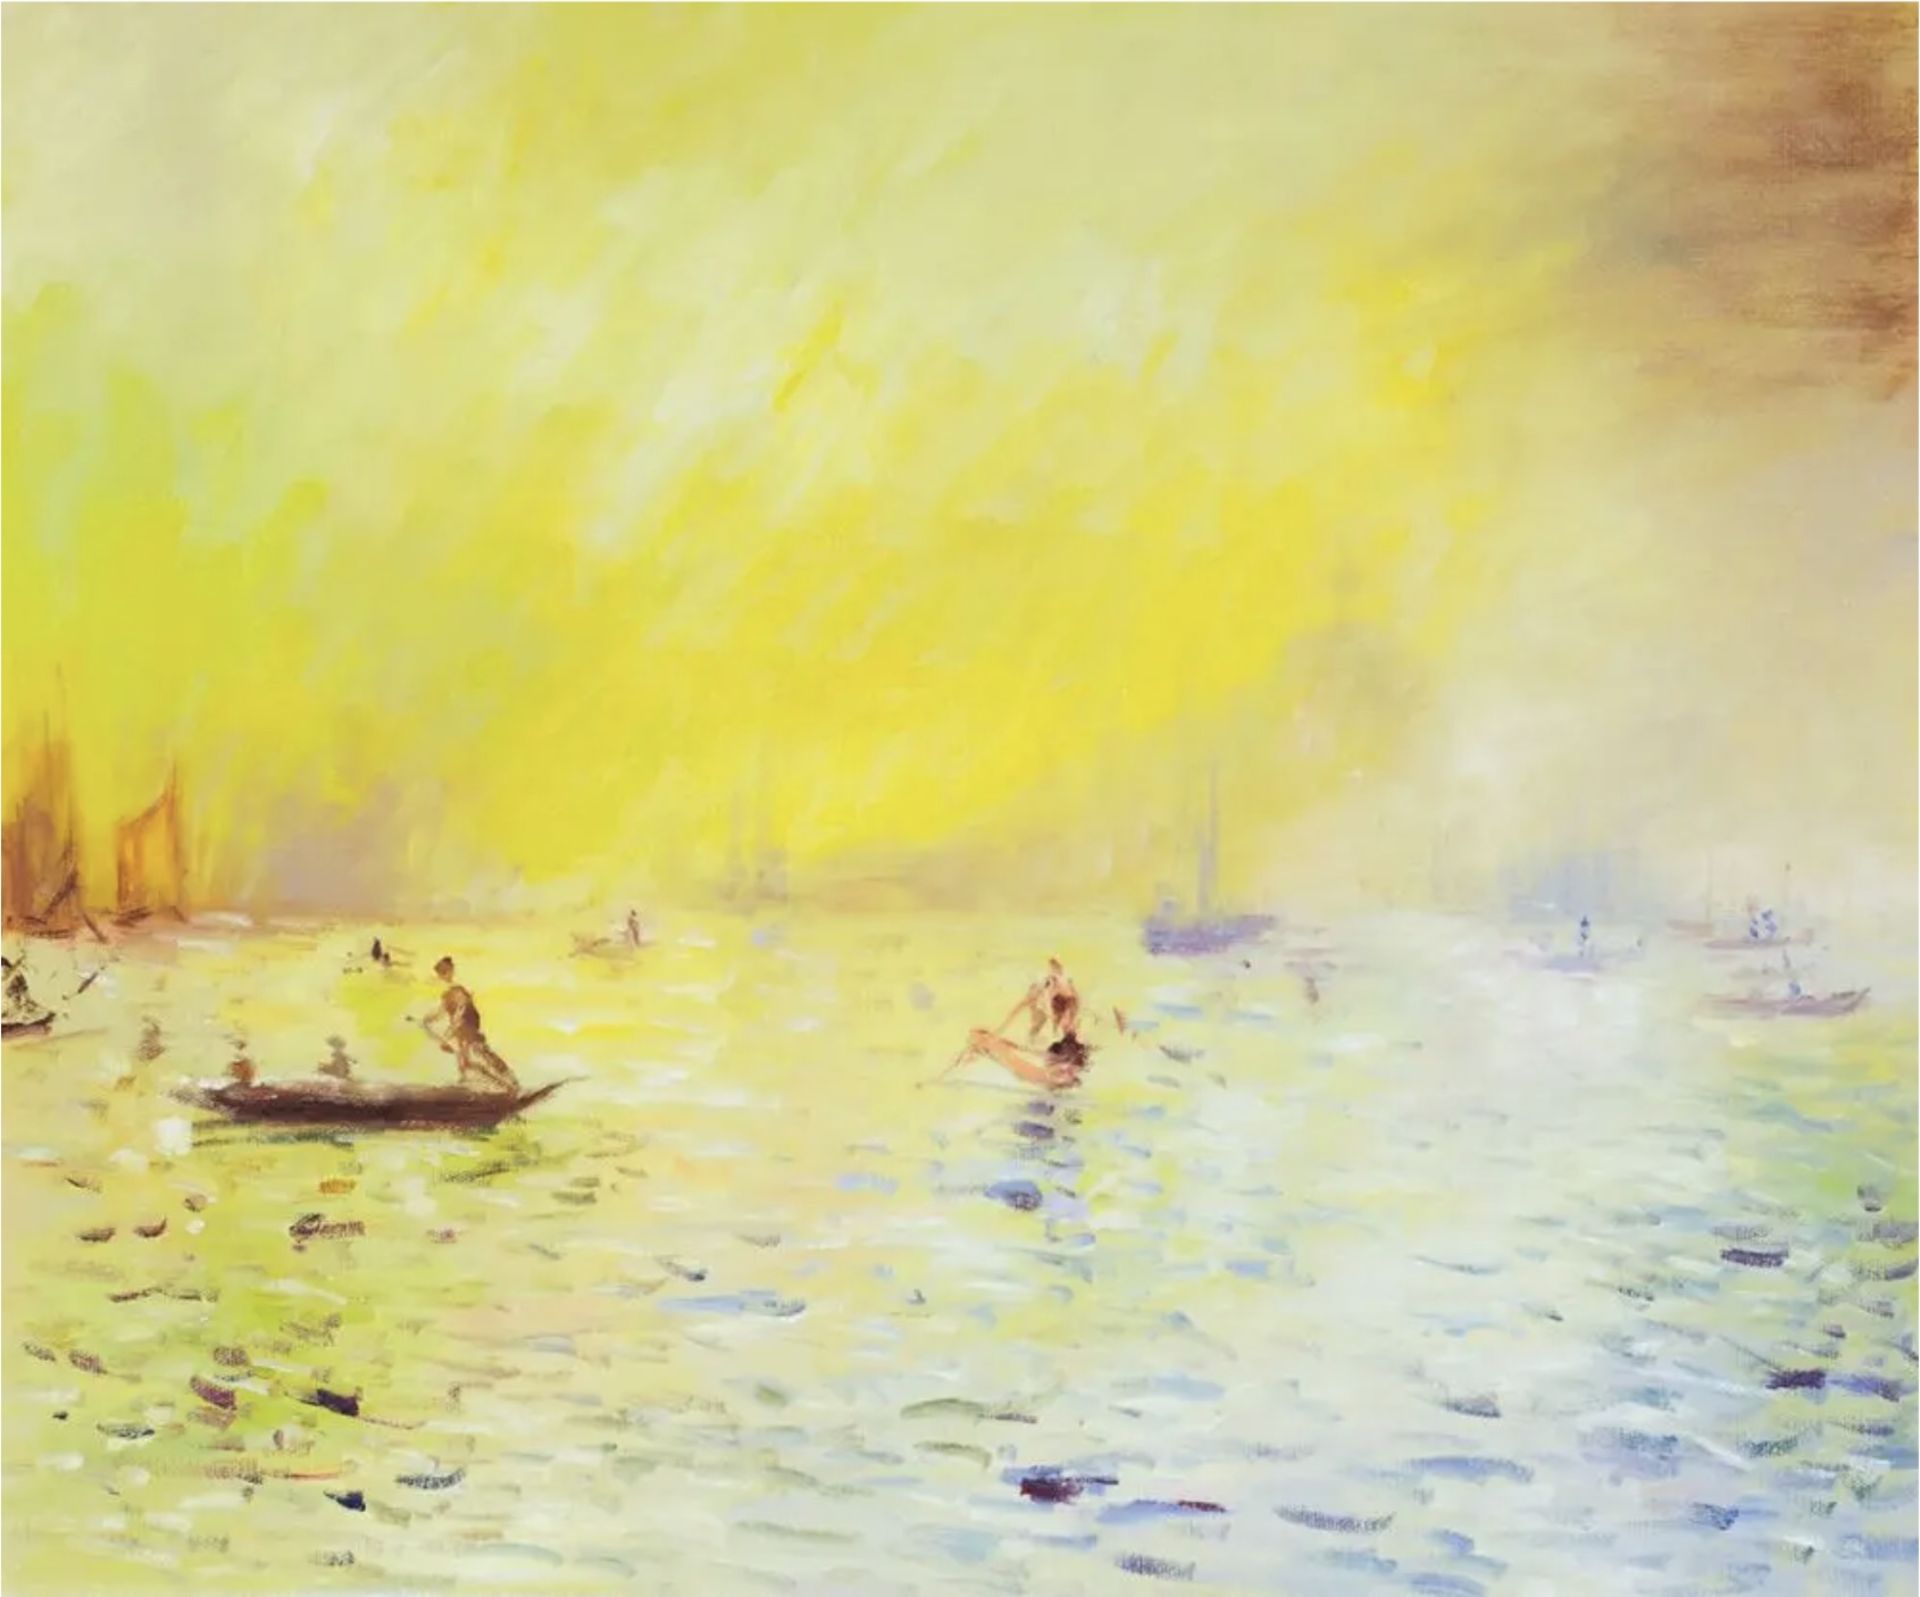 Pierre Auguste Renoir "View of Venice, Fog, 1872" Oil Painting, After